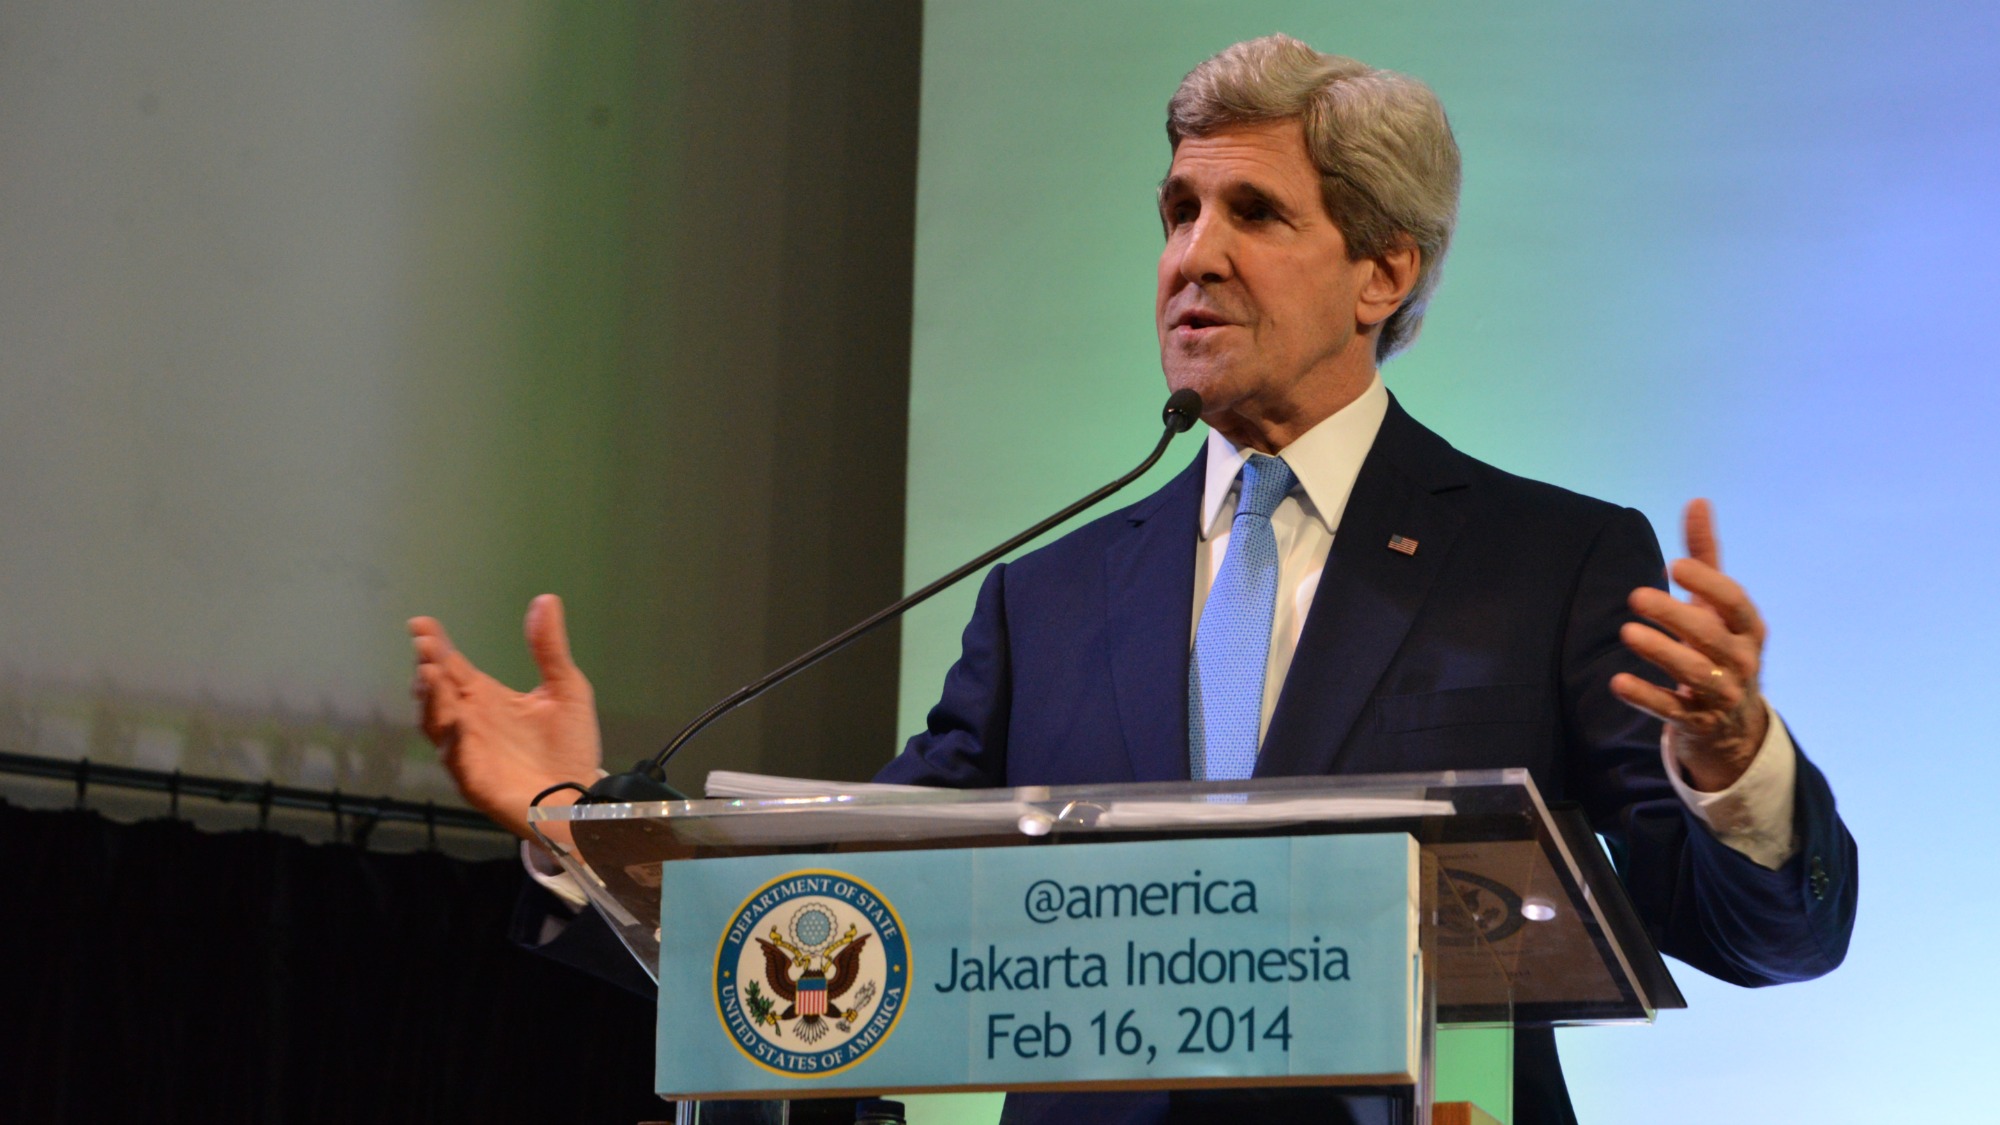 John Kerry speaks in Indonesia